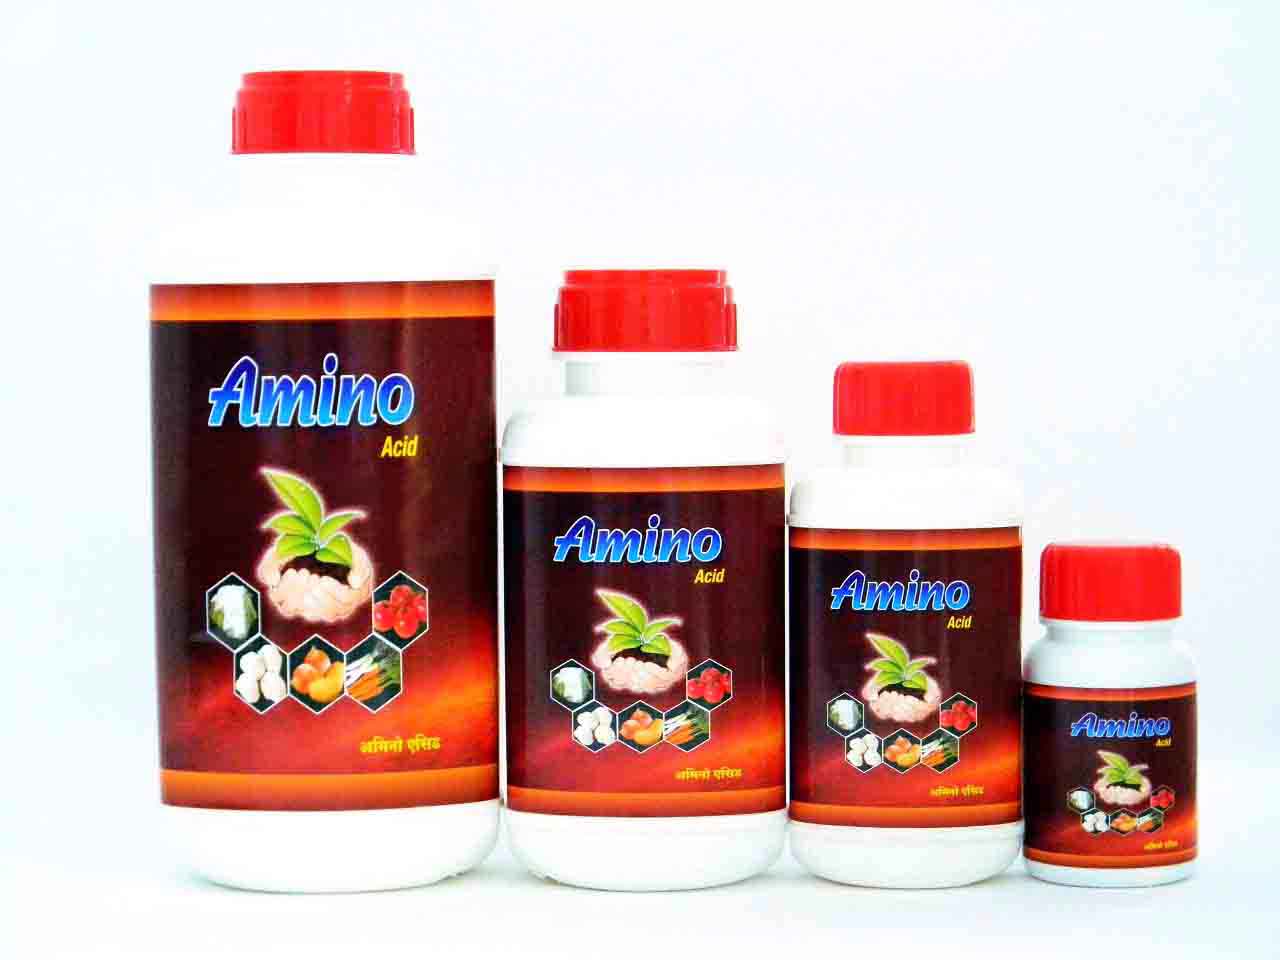 Amino Acid by New Malwa Agritech Corporation